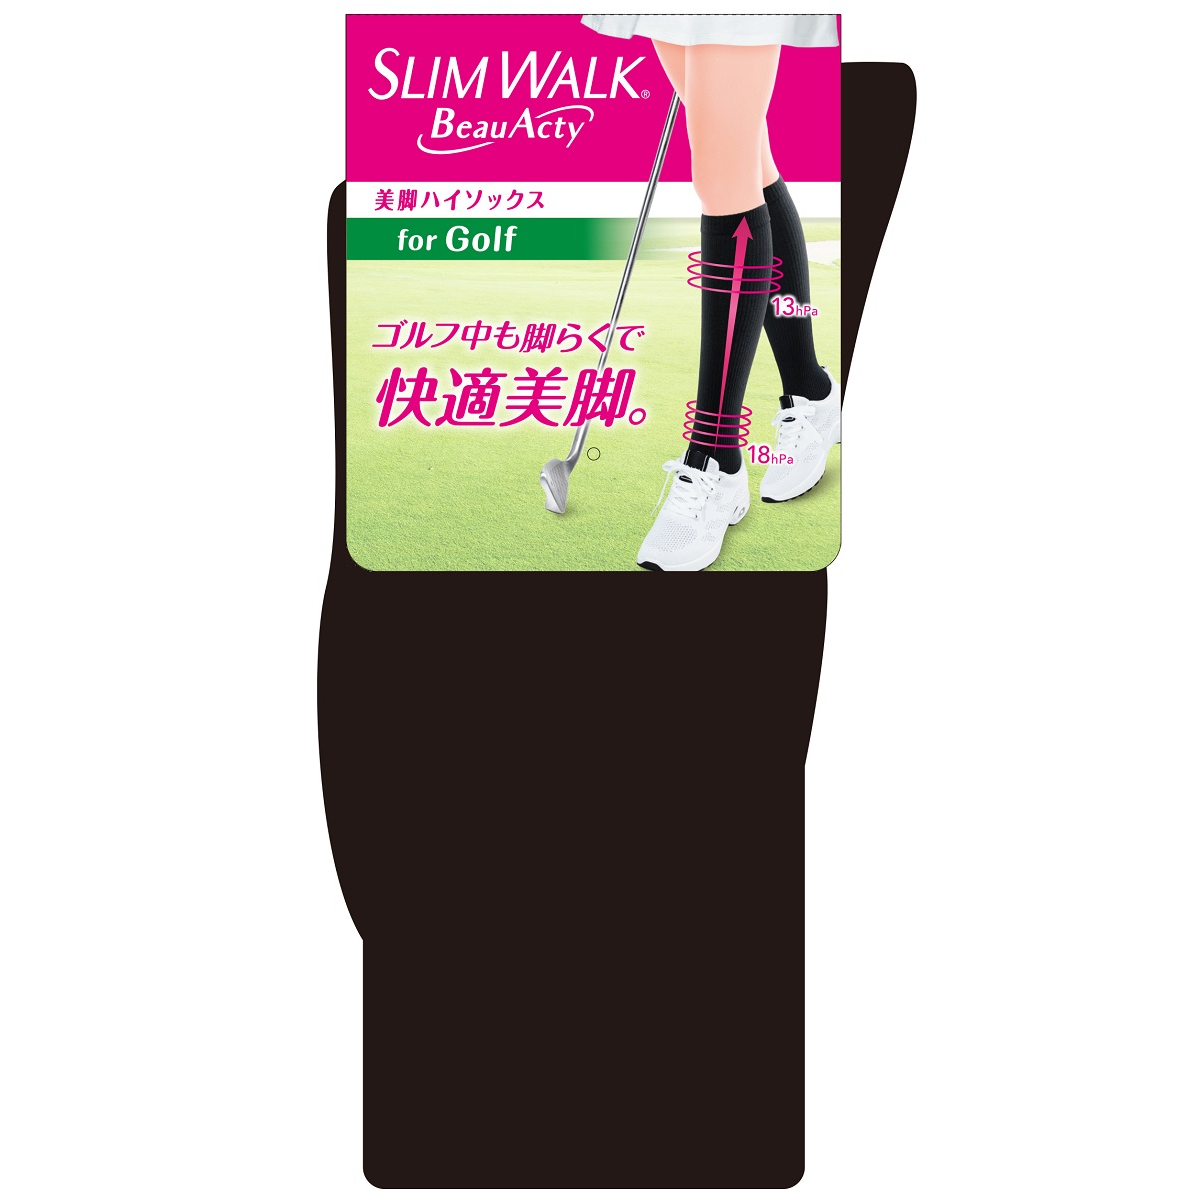 SLIMWALK BeauActy Compression Socks for Golf Black 22-24 cm / ถุงเท้ากระชับเรียวขา 1 คู่ (สีดำ)